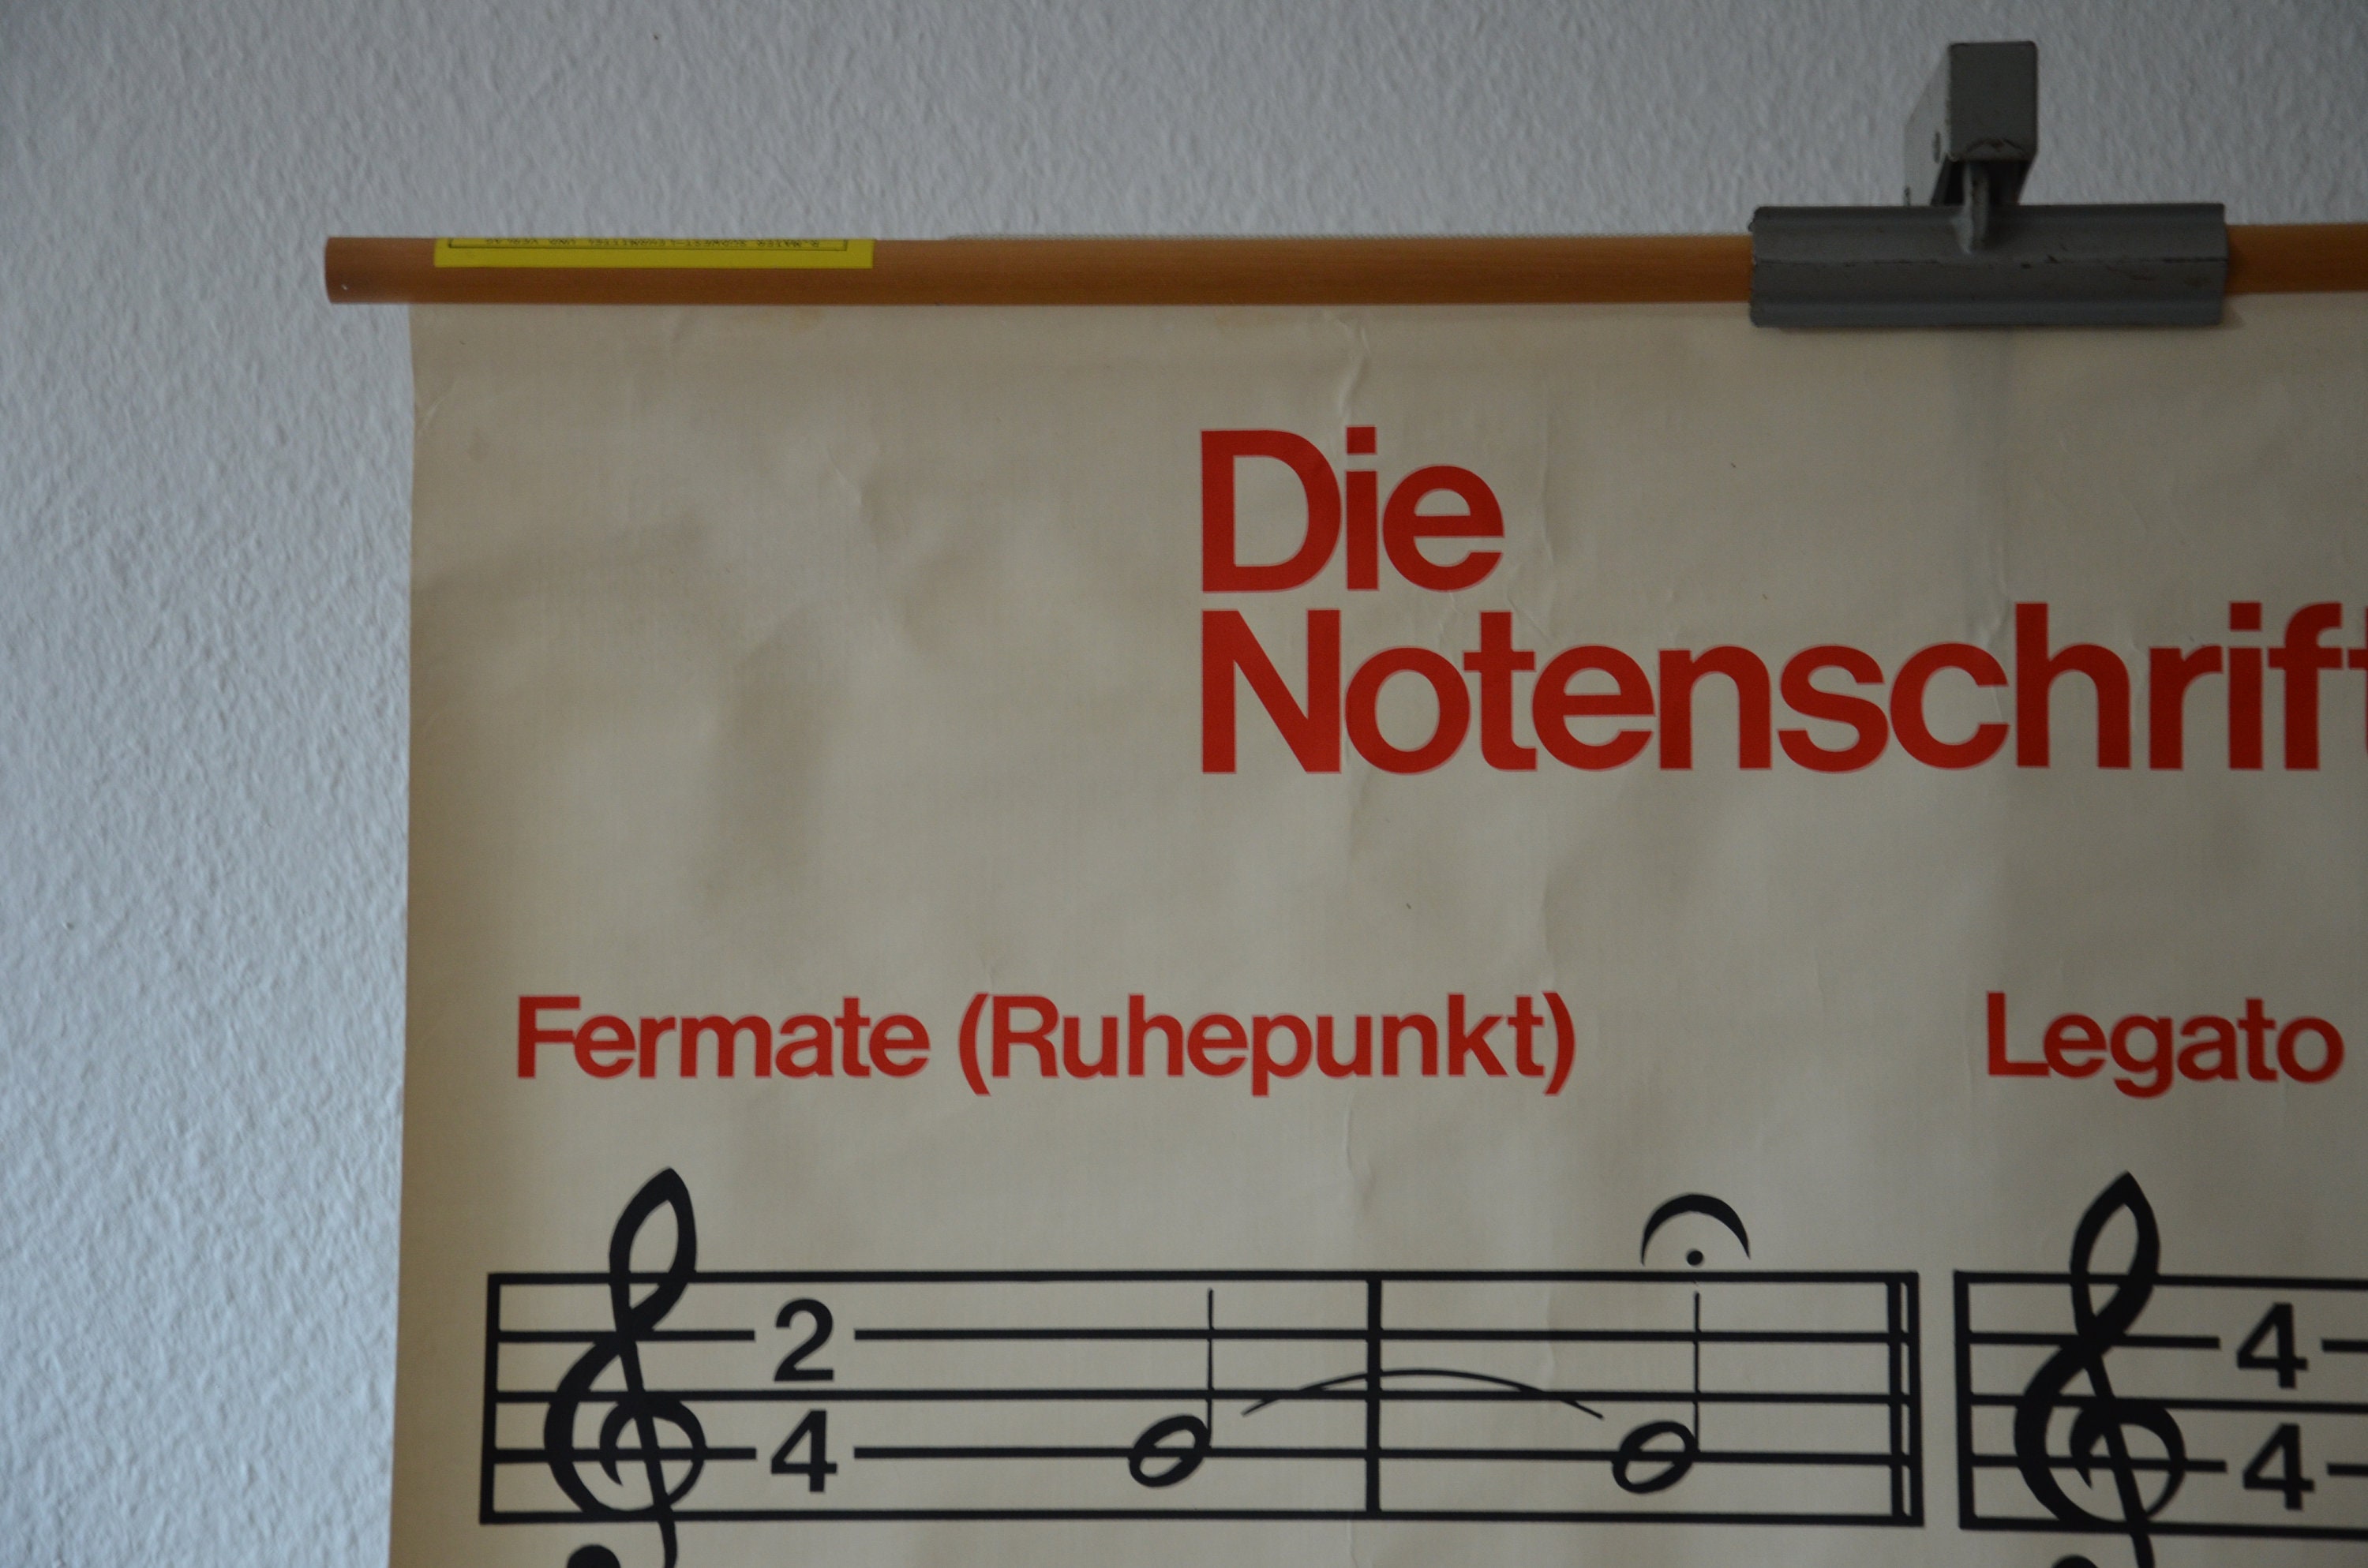 Musical Notation original vintage 1980s German educational poster school wall chart print classical sheet Music Notes musician sonata beat